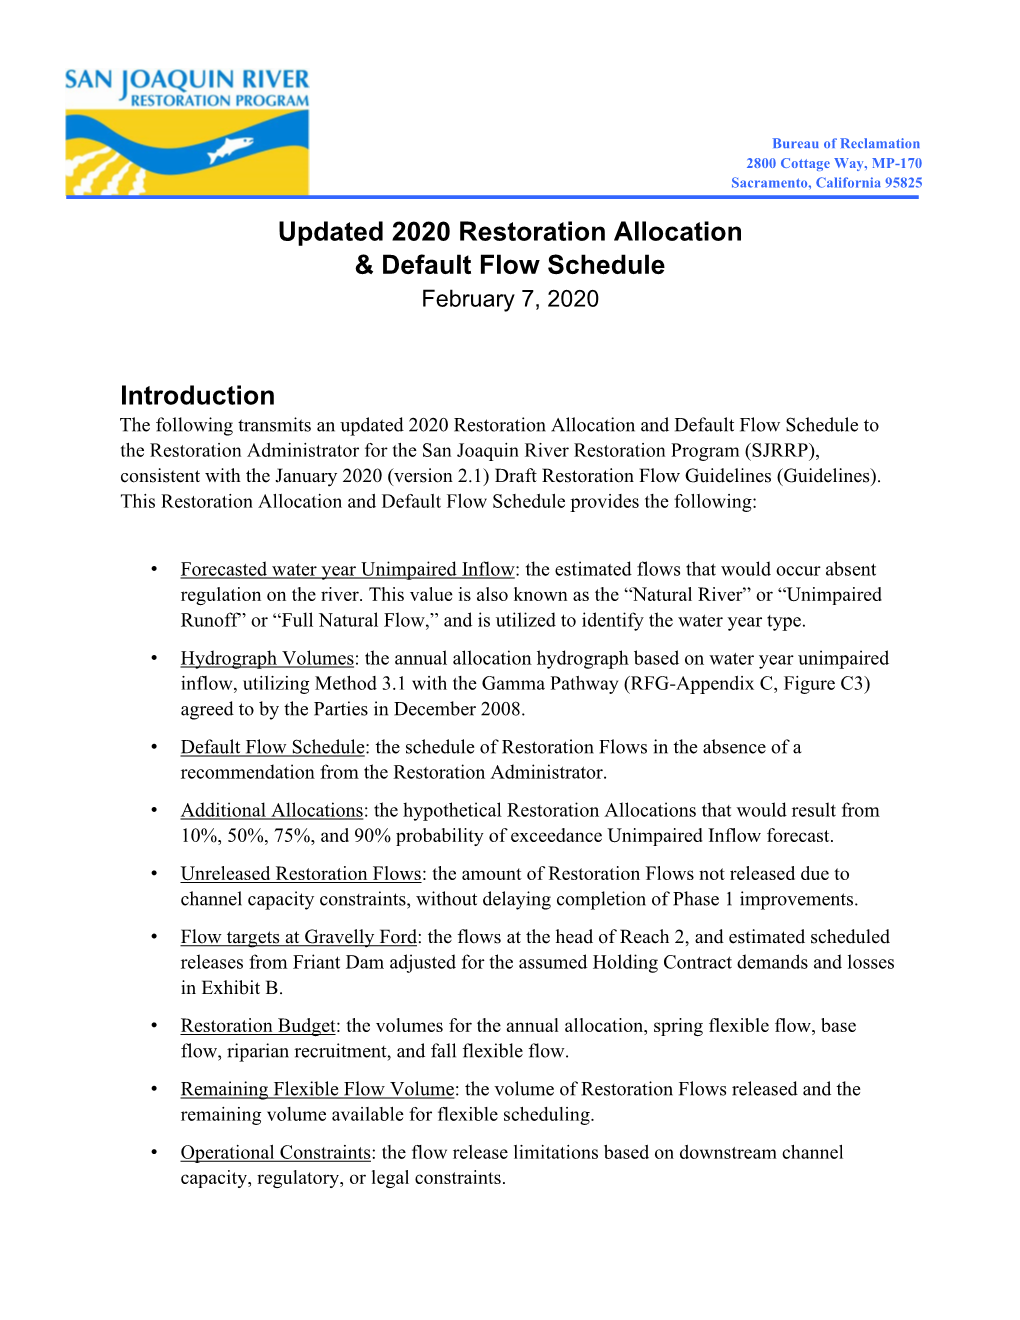 Updated 2020 Restoration Allocation & Default Flow Schedule Introduction